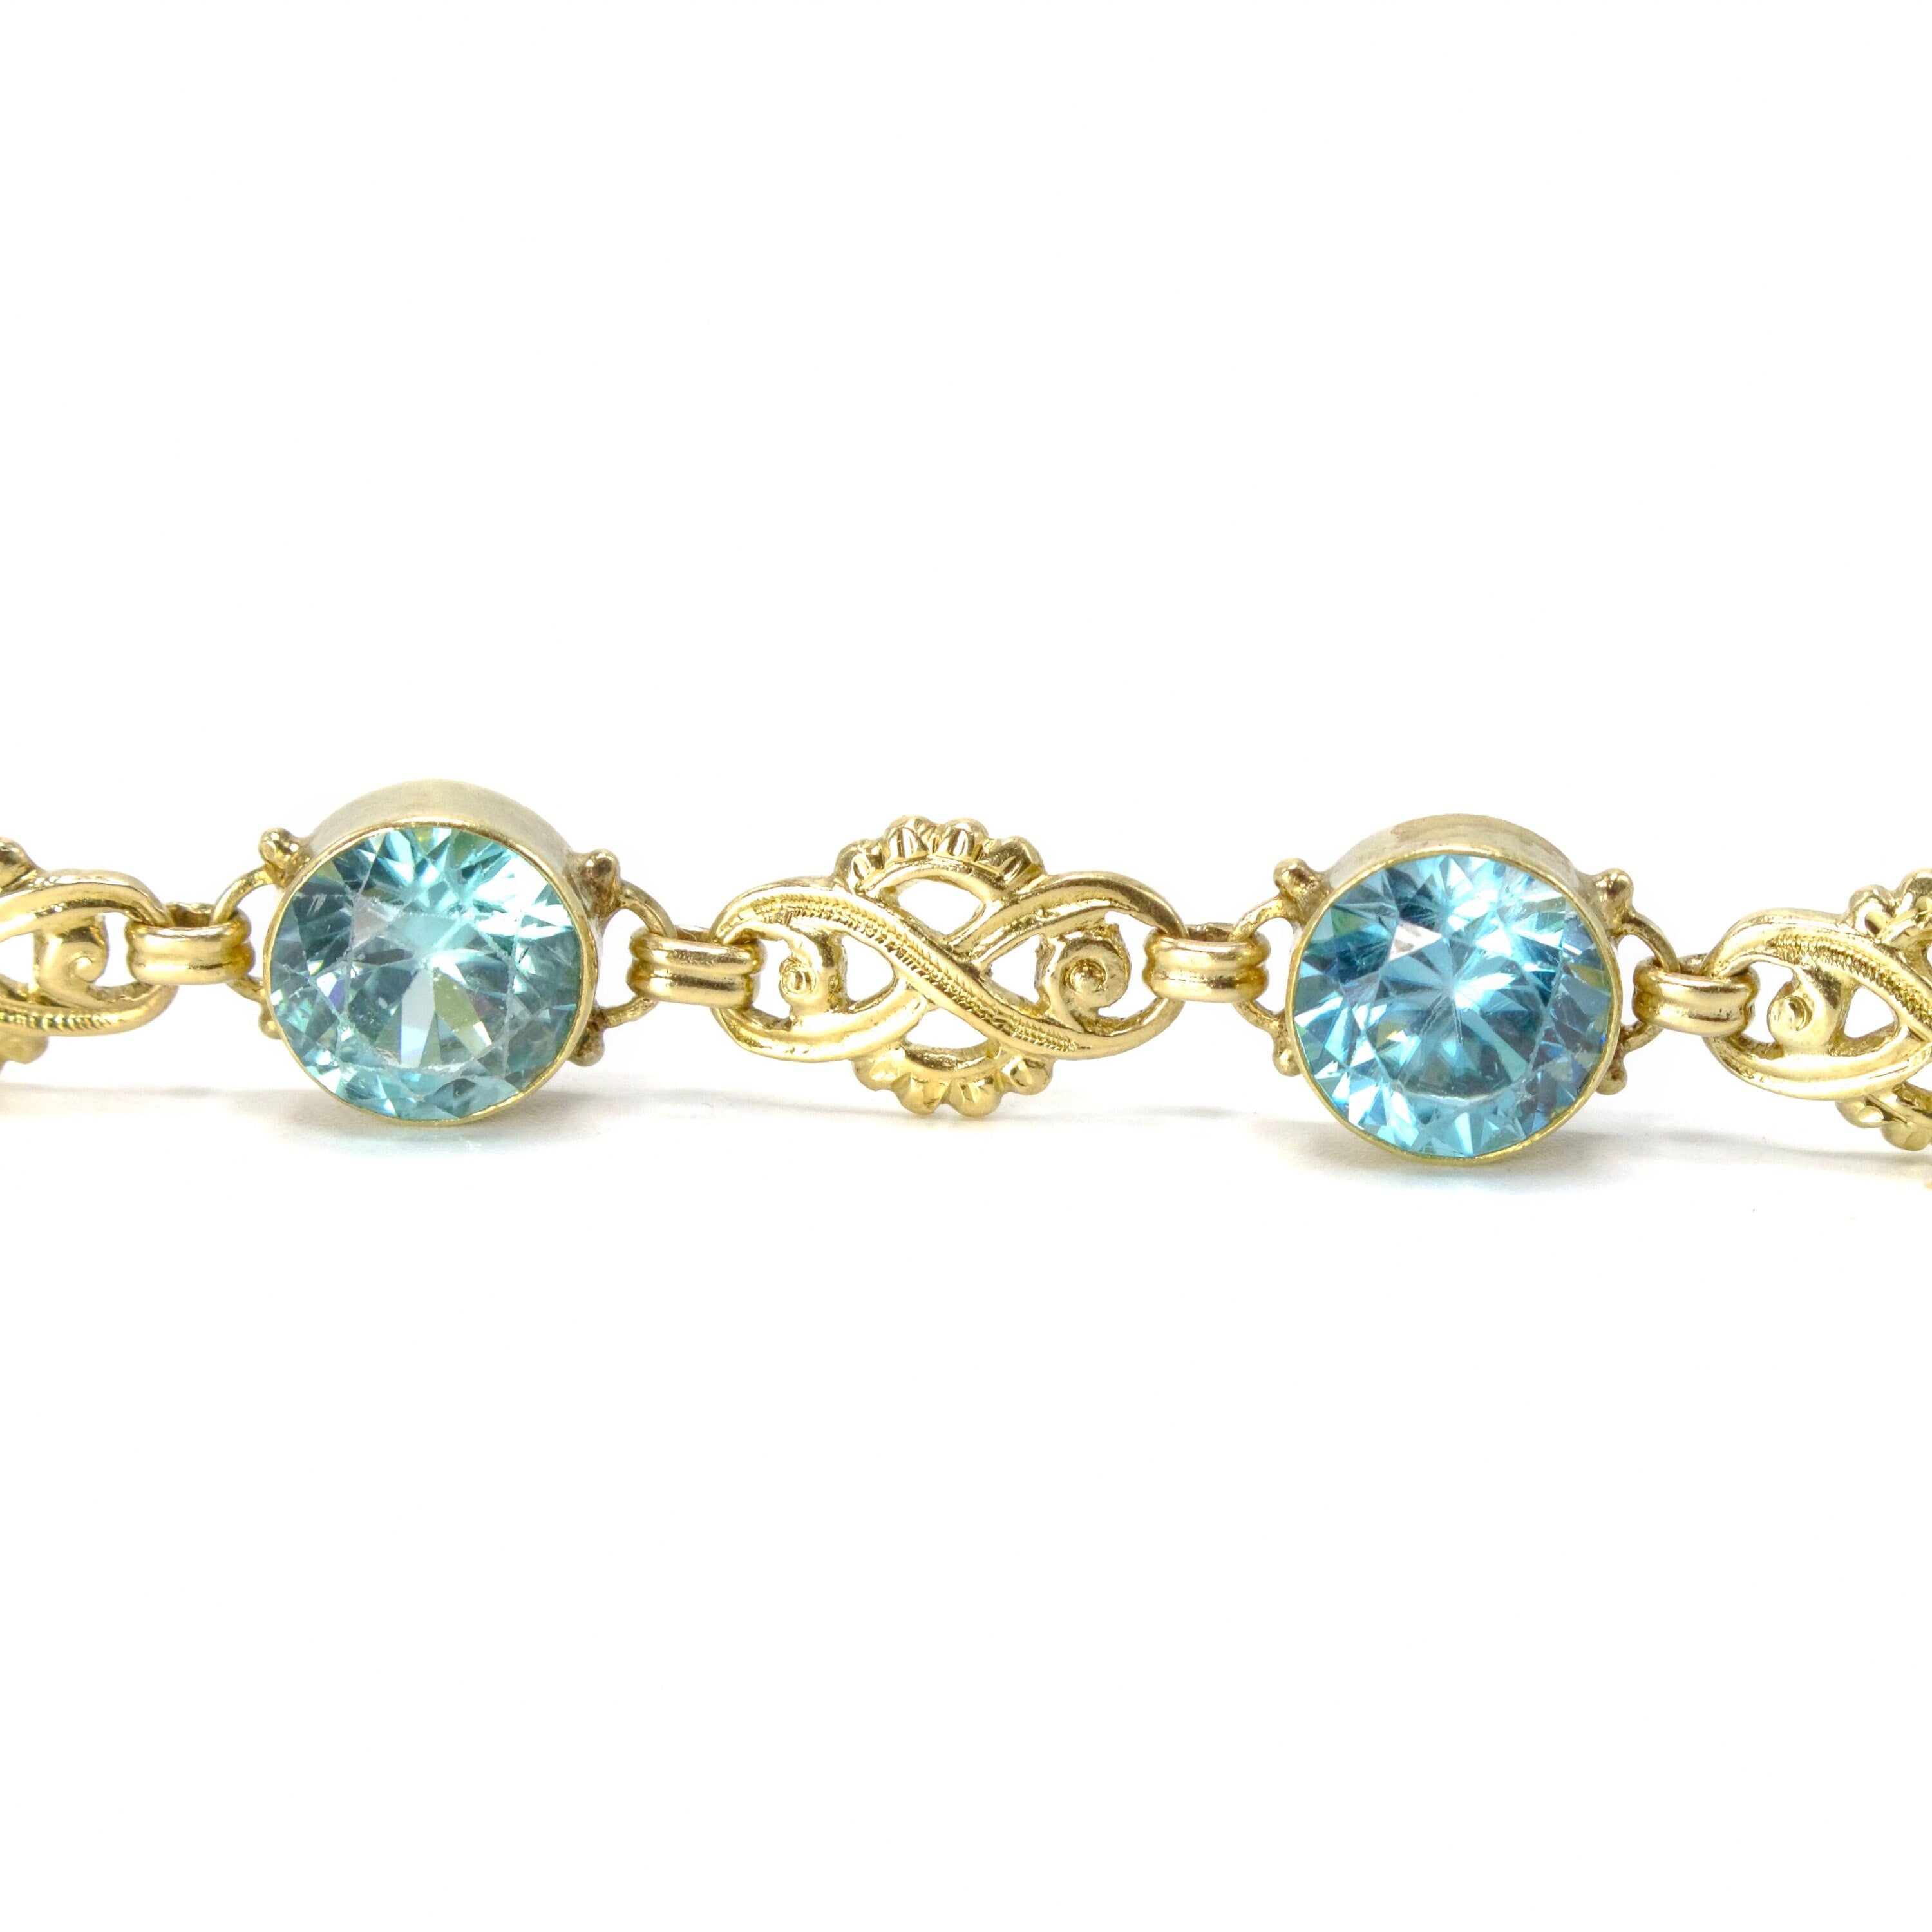 14K Yellow Gold Blue Zircon Link Bracelet, 7 inches, ca. 1930